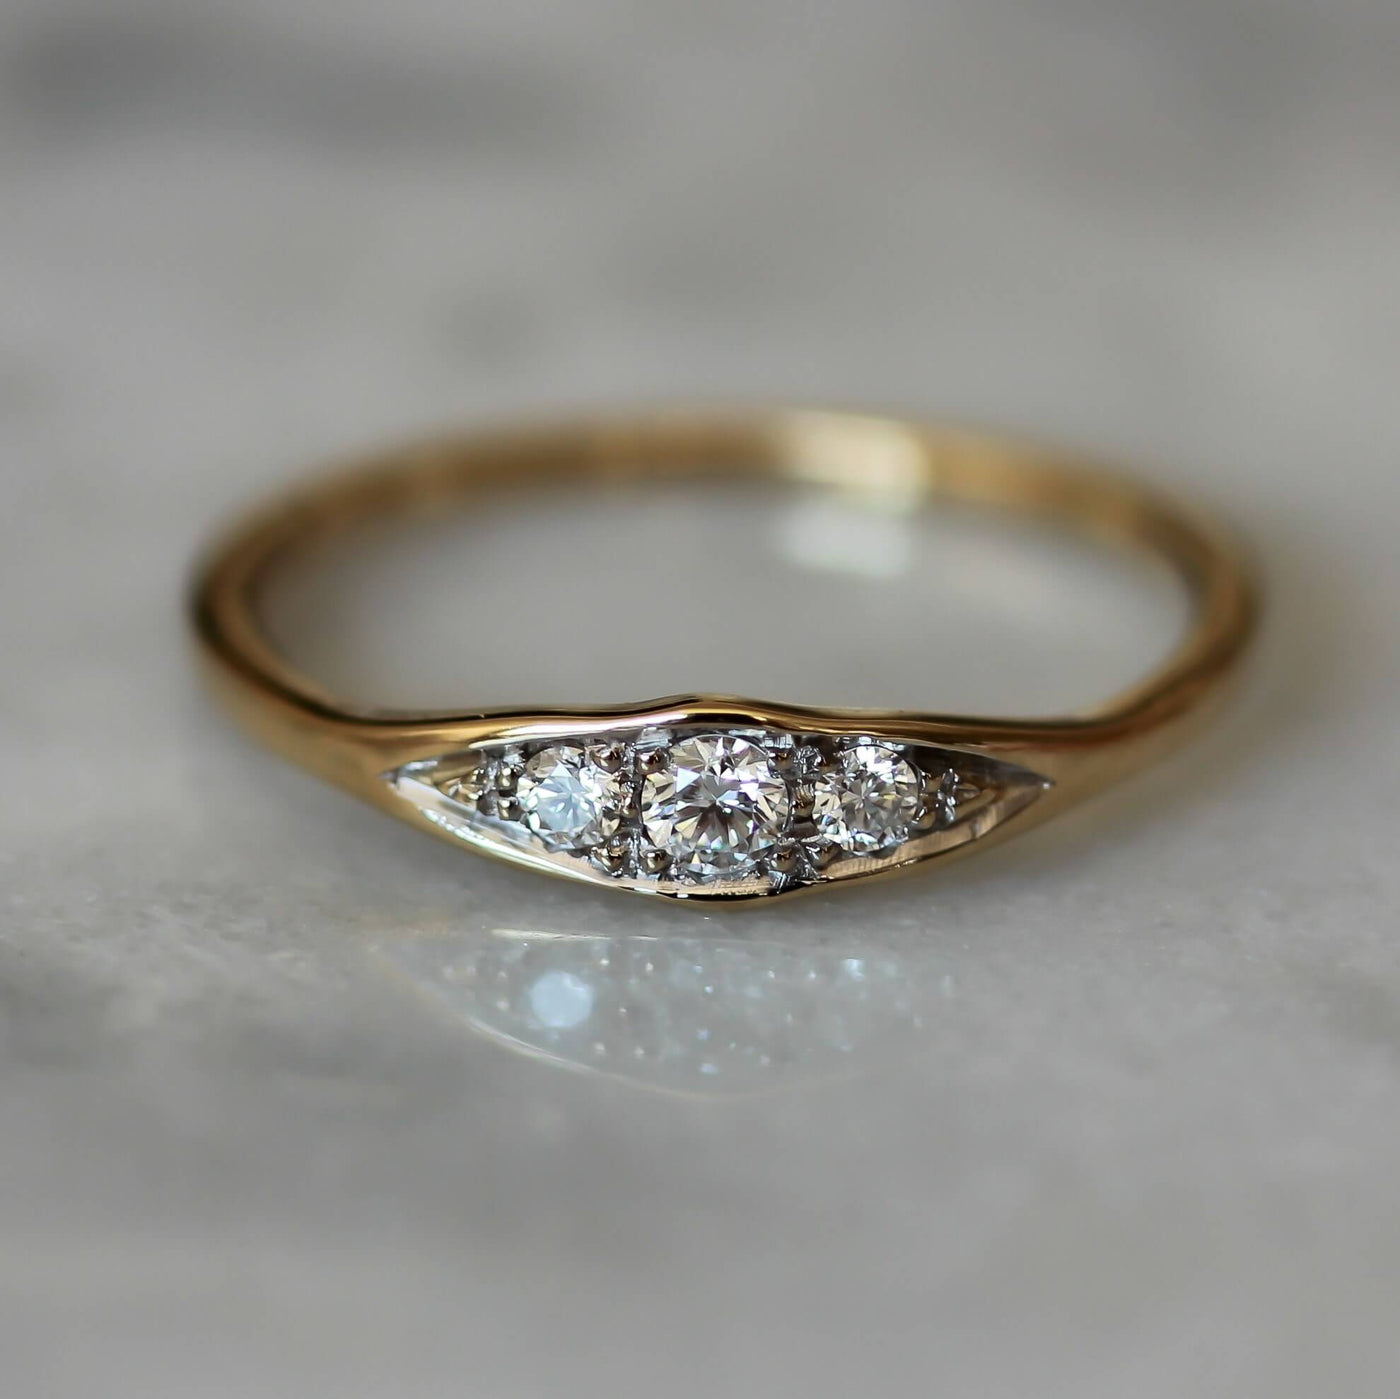 Kim Ring 14K Gold White Diamonds Rings 